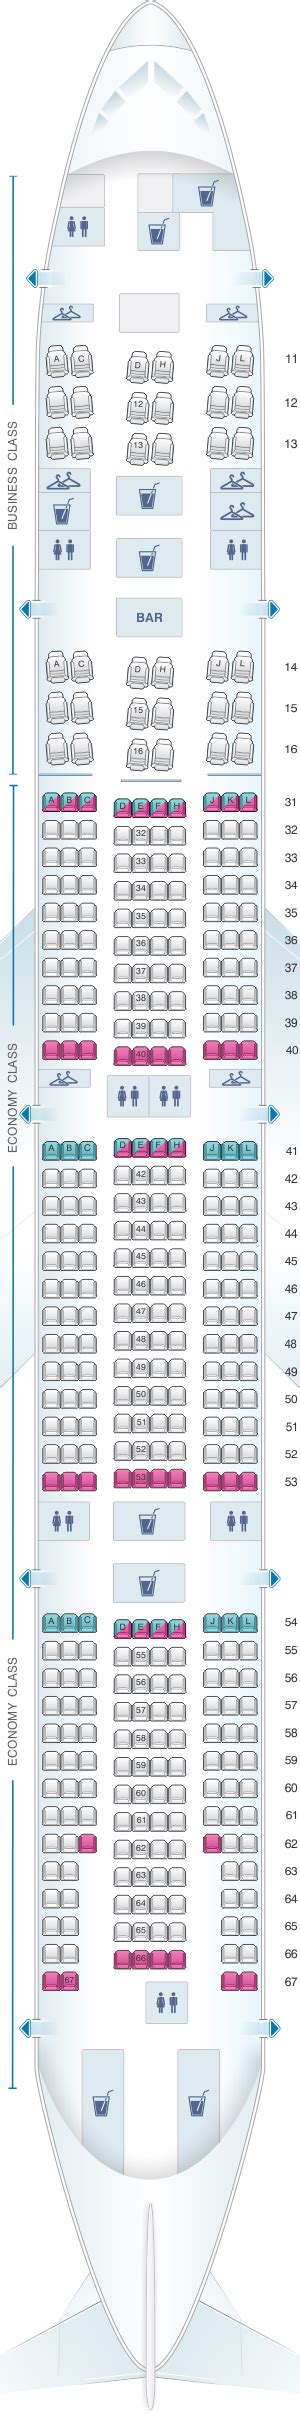 Seat Map Etihad Airways Boeing B Er Class Seatmaestro Porn